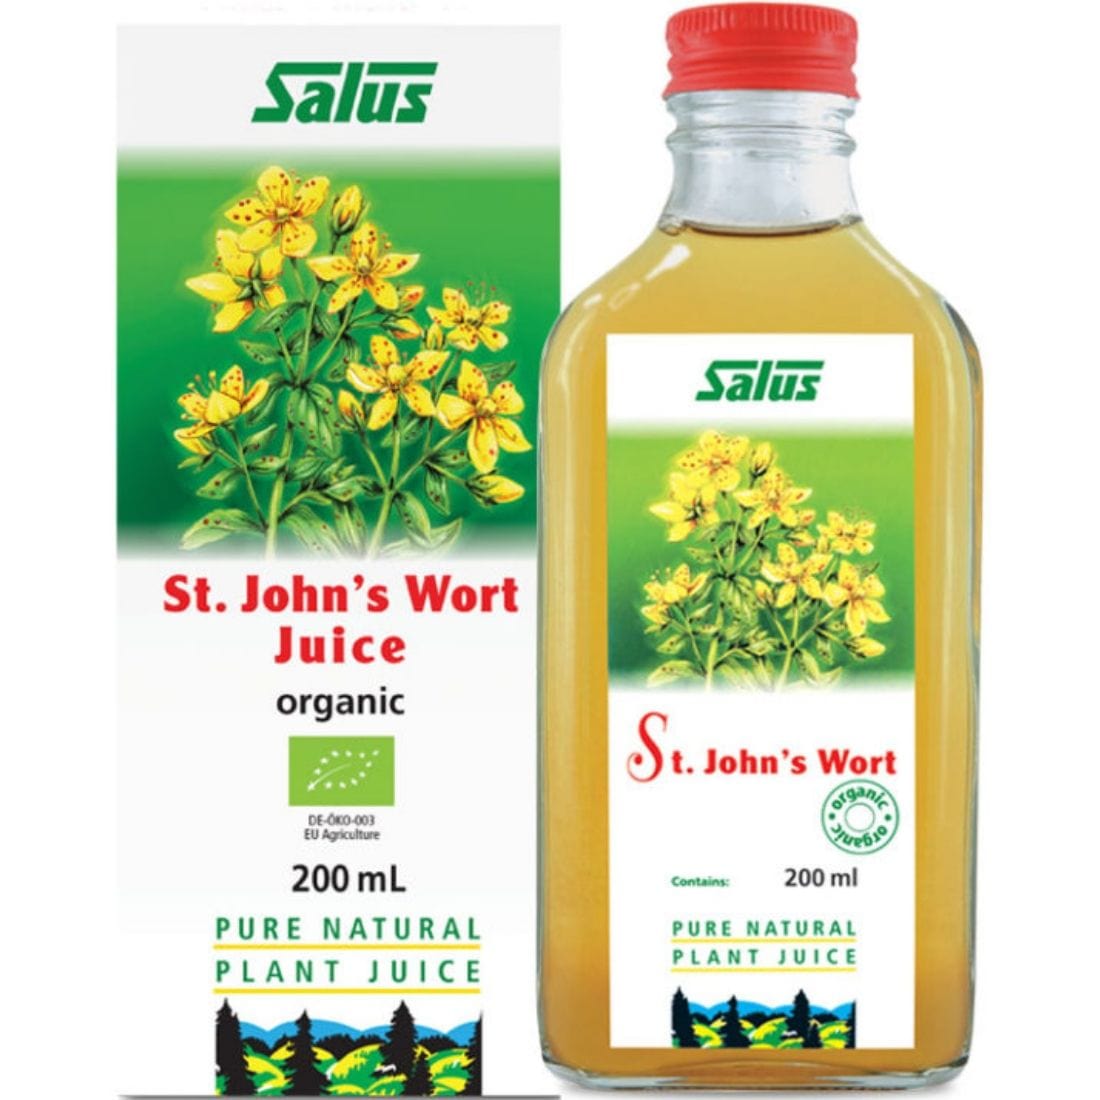 Salus Organic St. John’s Wort Juice, 200ml